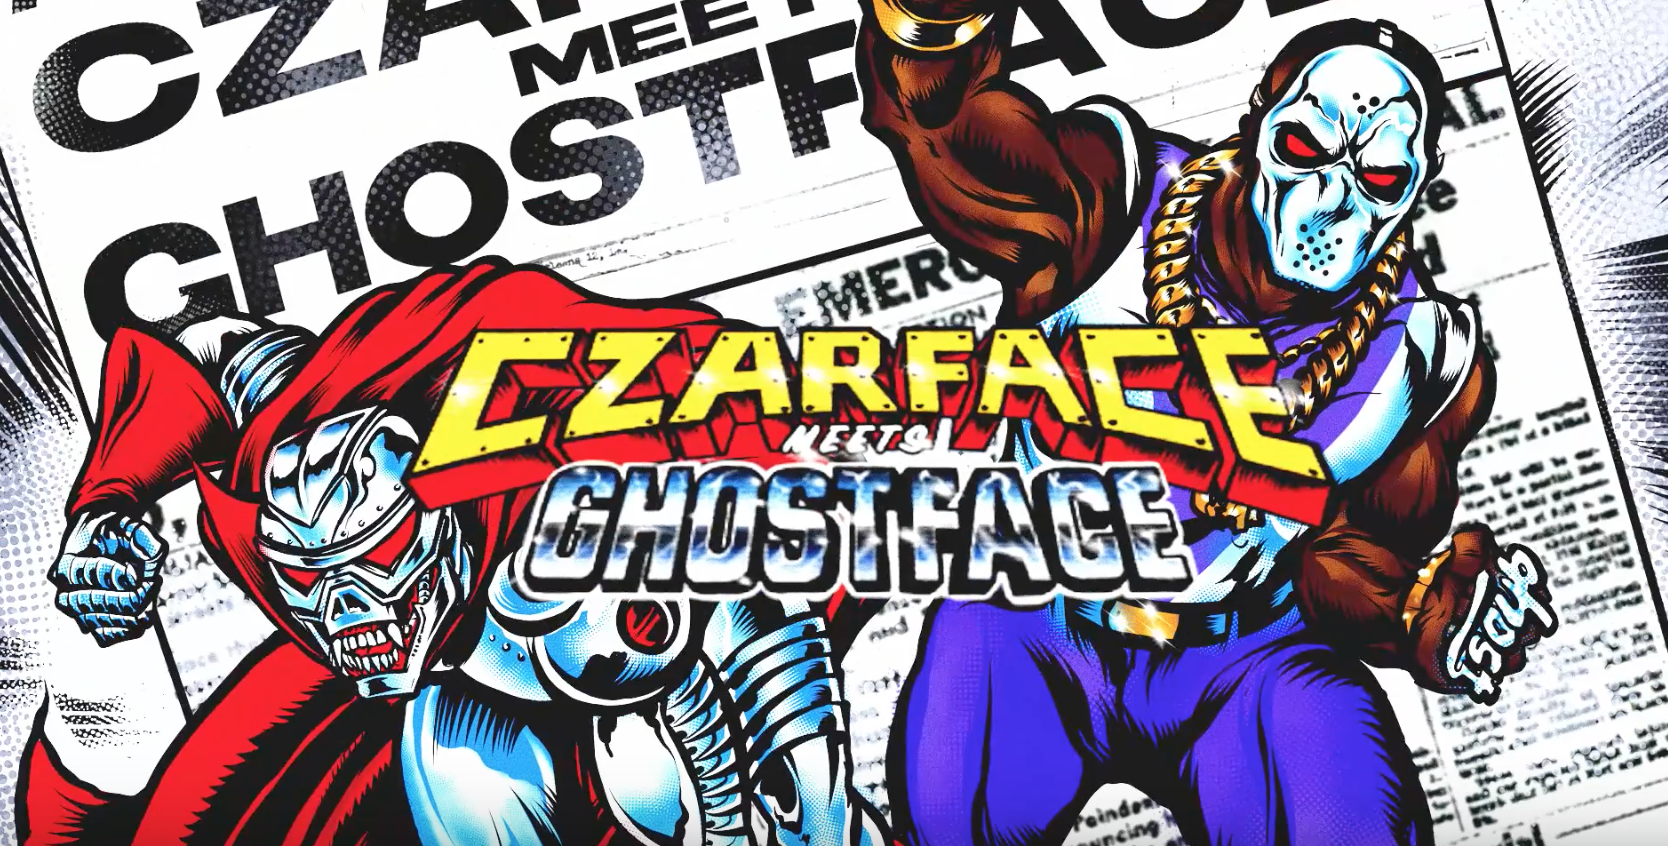 'Czarface Meets Ghostface'